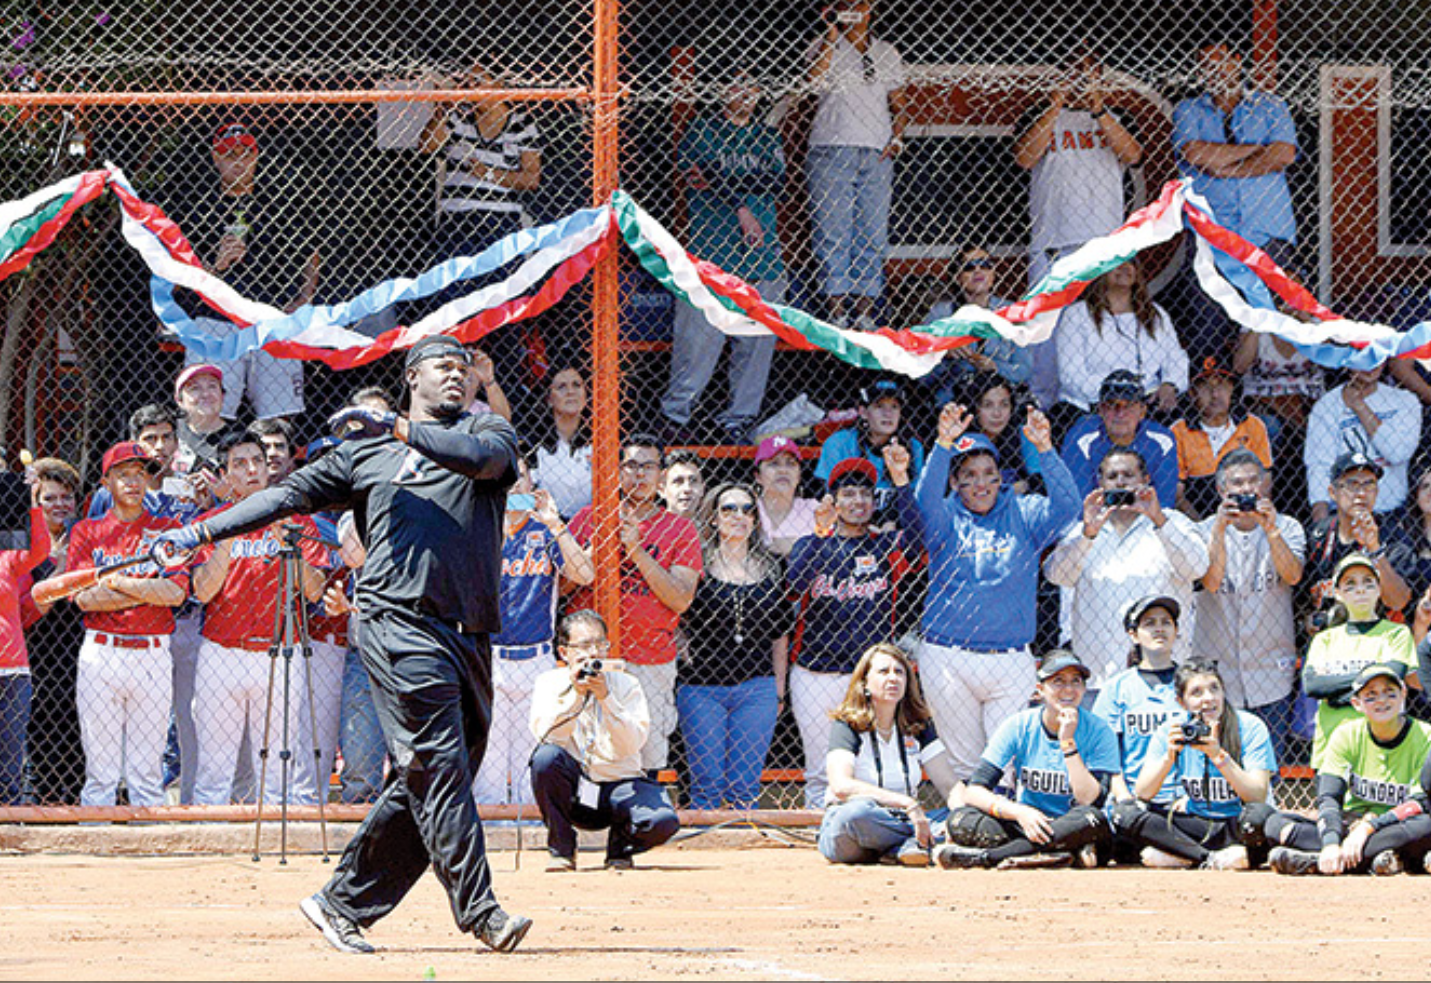 Ken Griffey Jr, Baseball, Mexico, 2014